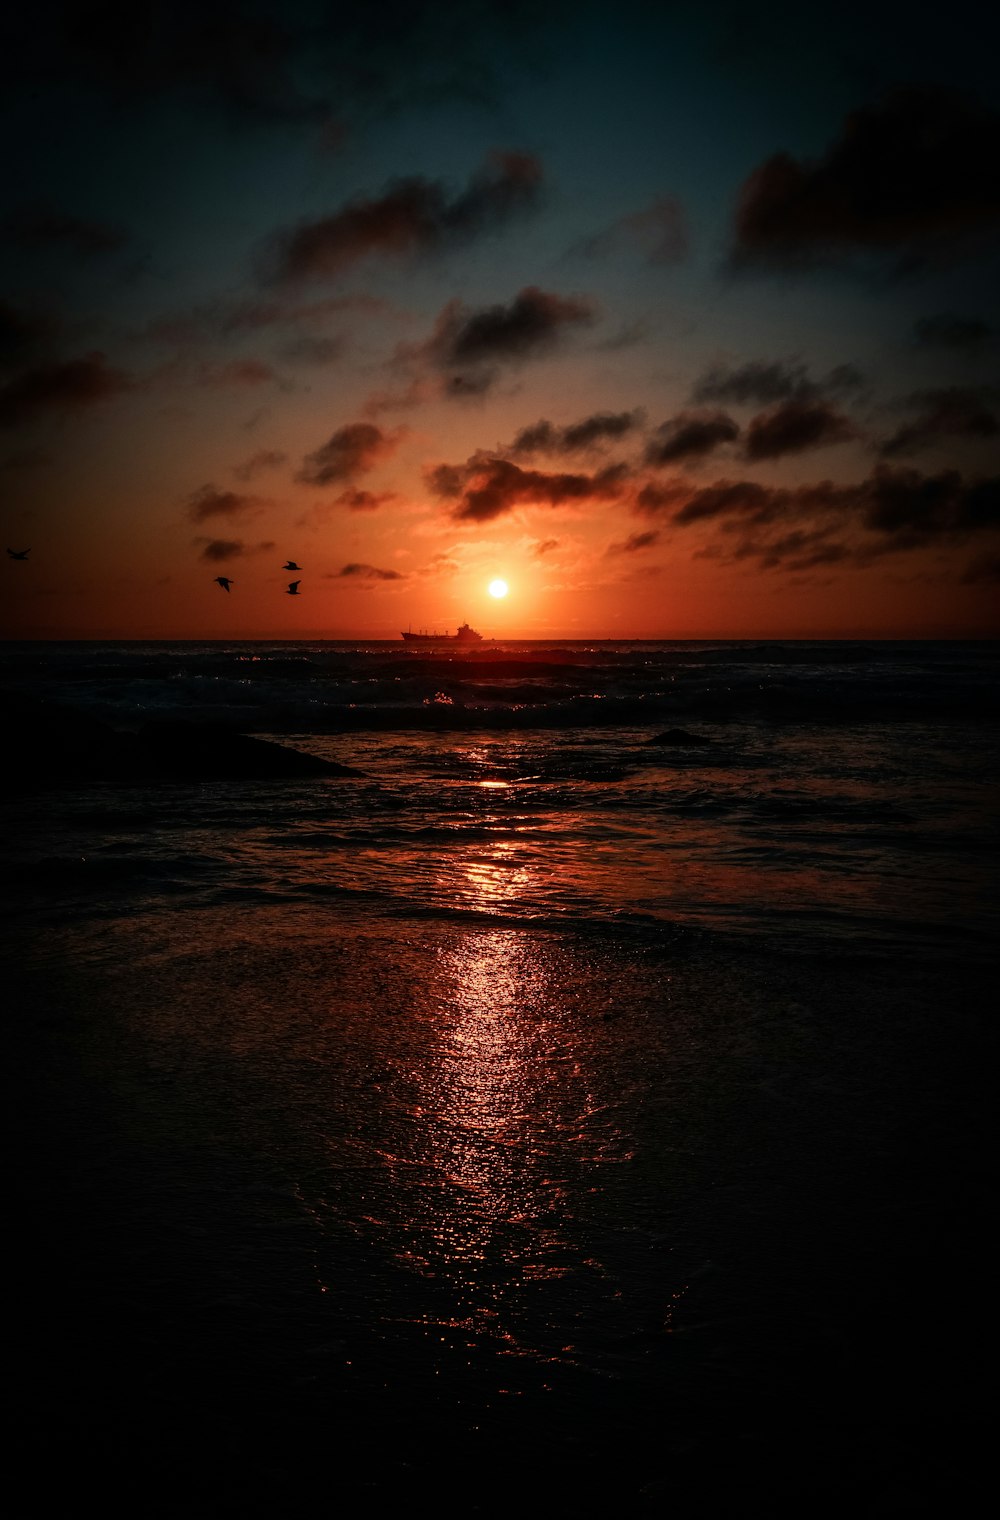 birds flying over wavy ocean during sunset